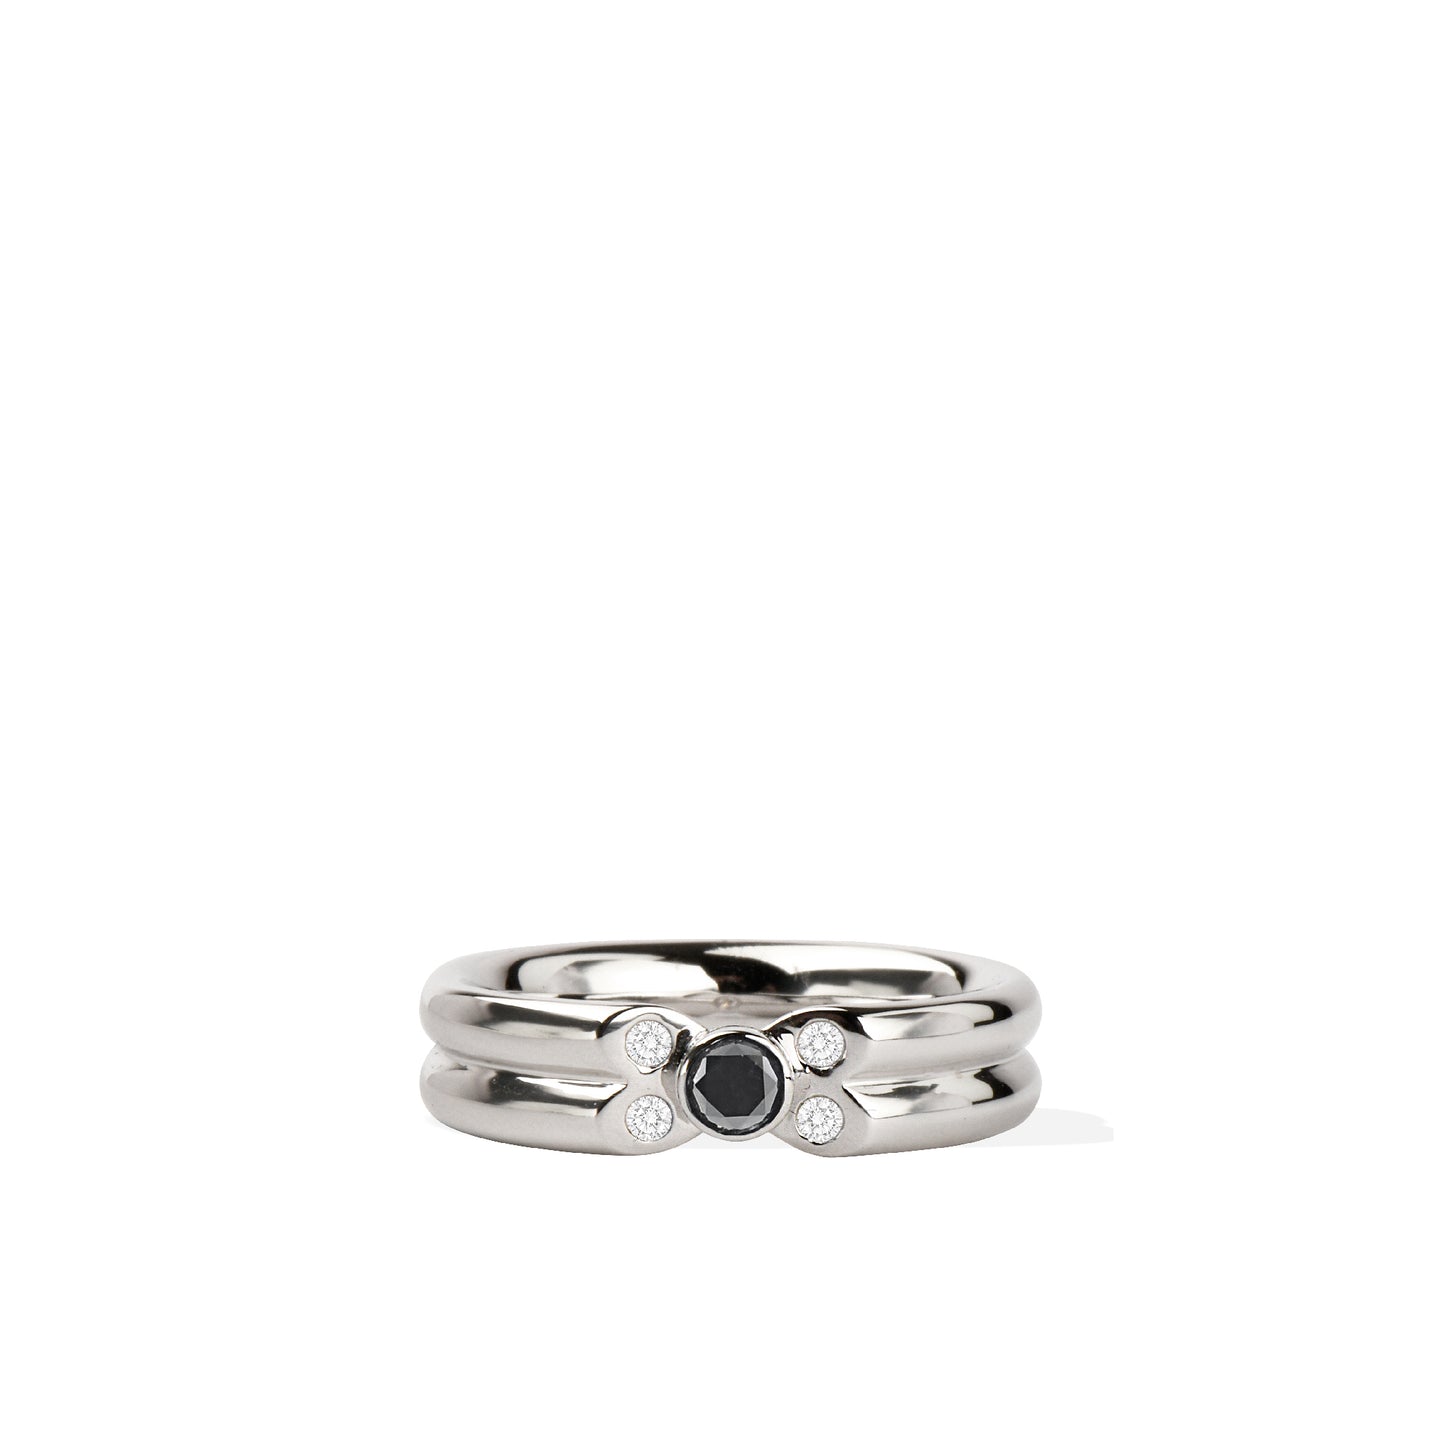 Black Diamond Center Silver Ring | White & Black Diamond Sterling Silver Ring